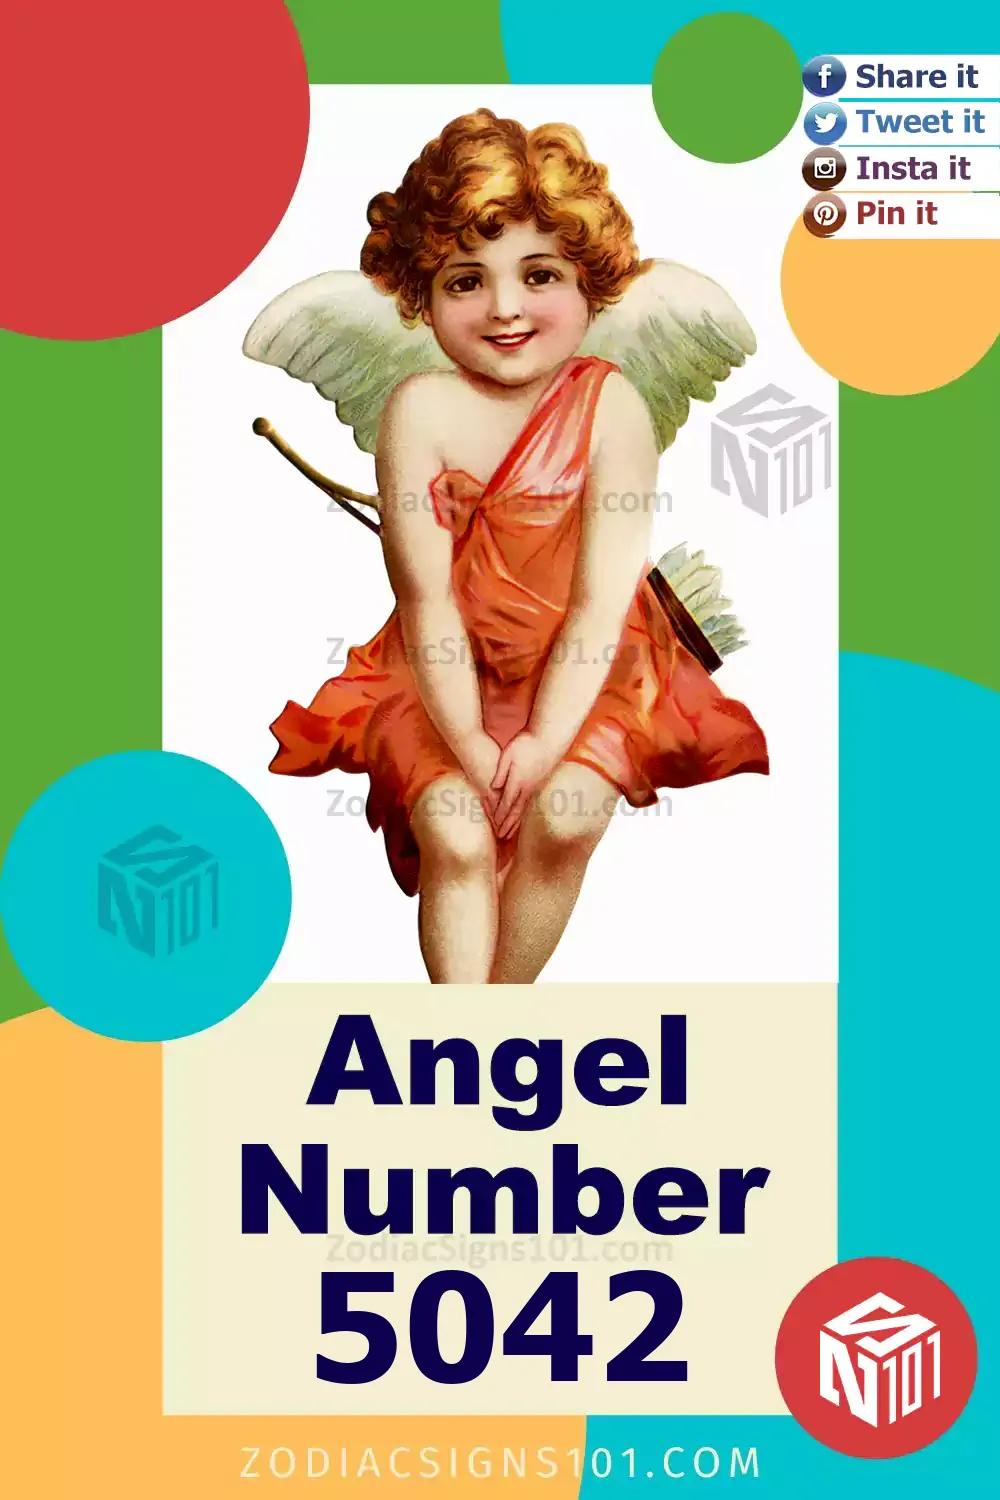 5042-Angel-Number-Meaning.jpg